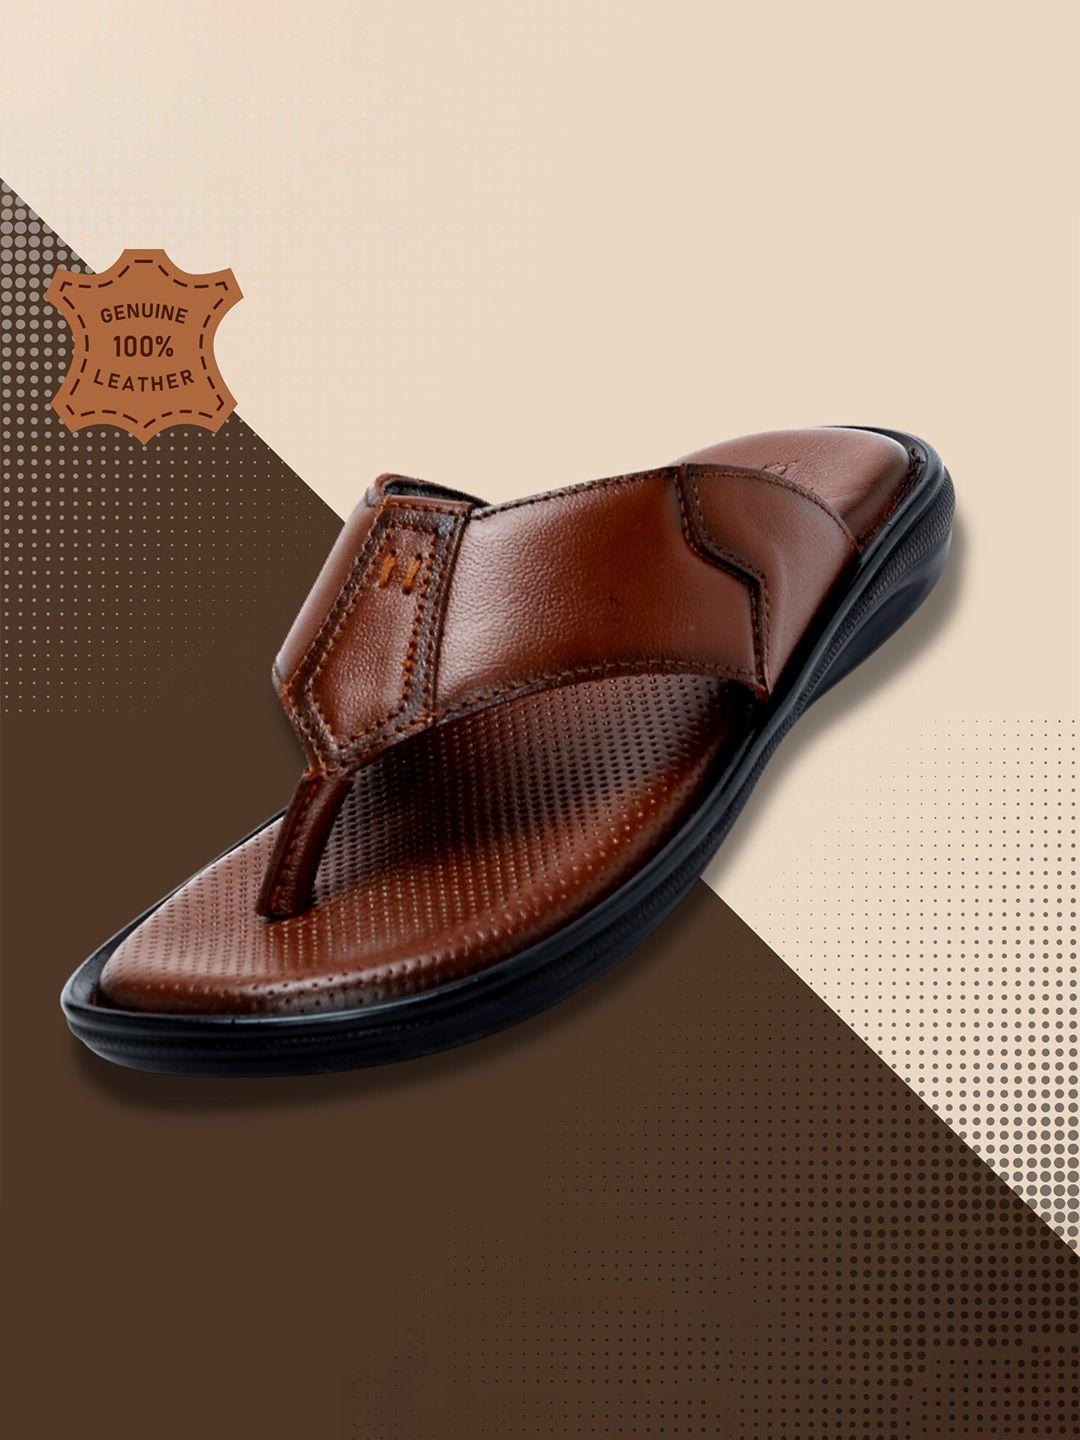 zoom shoes men textured leather comfort sandals